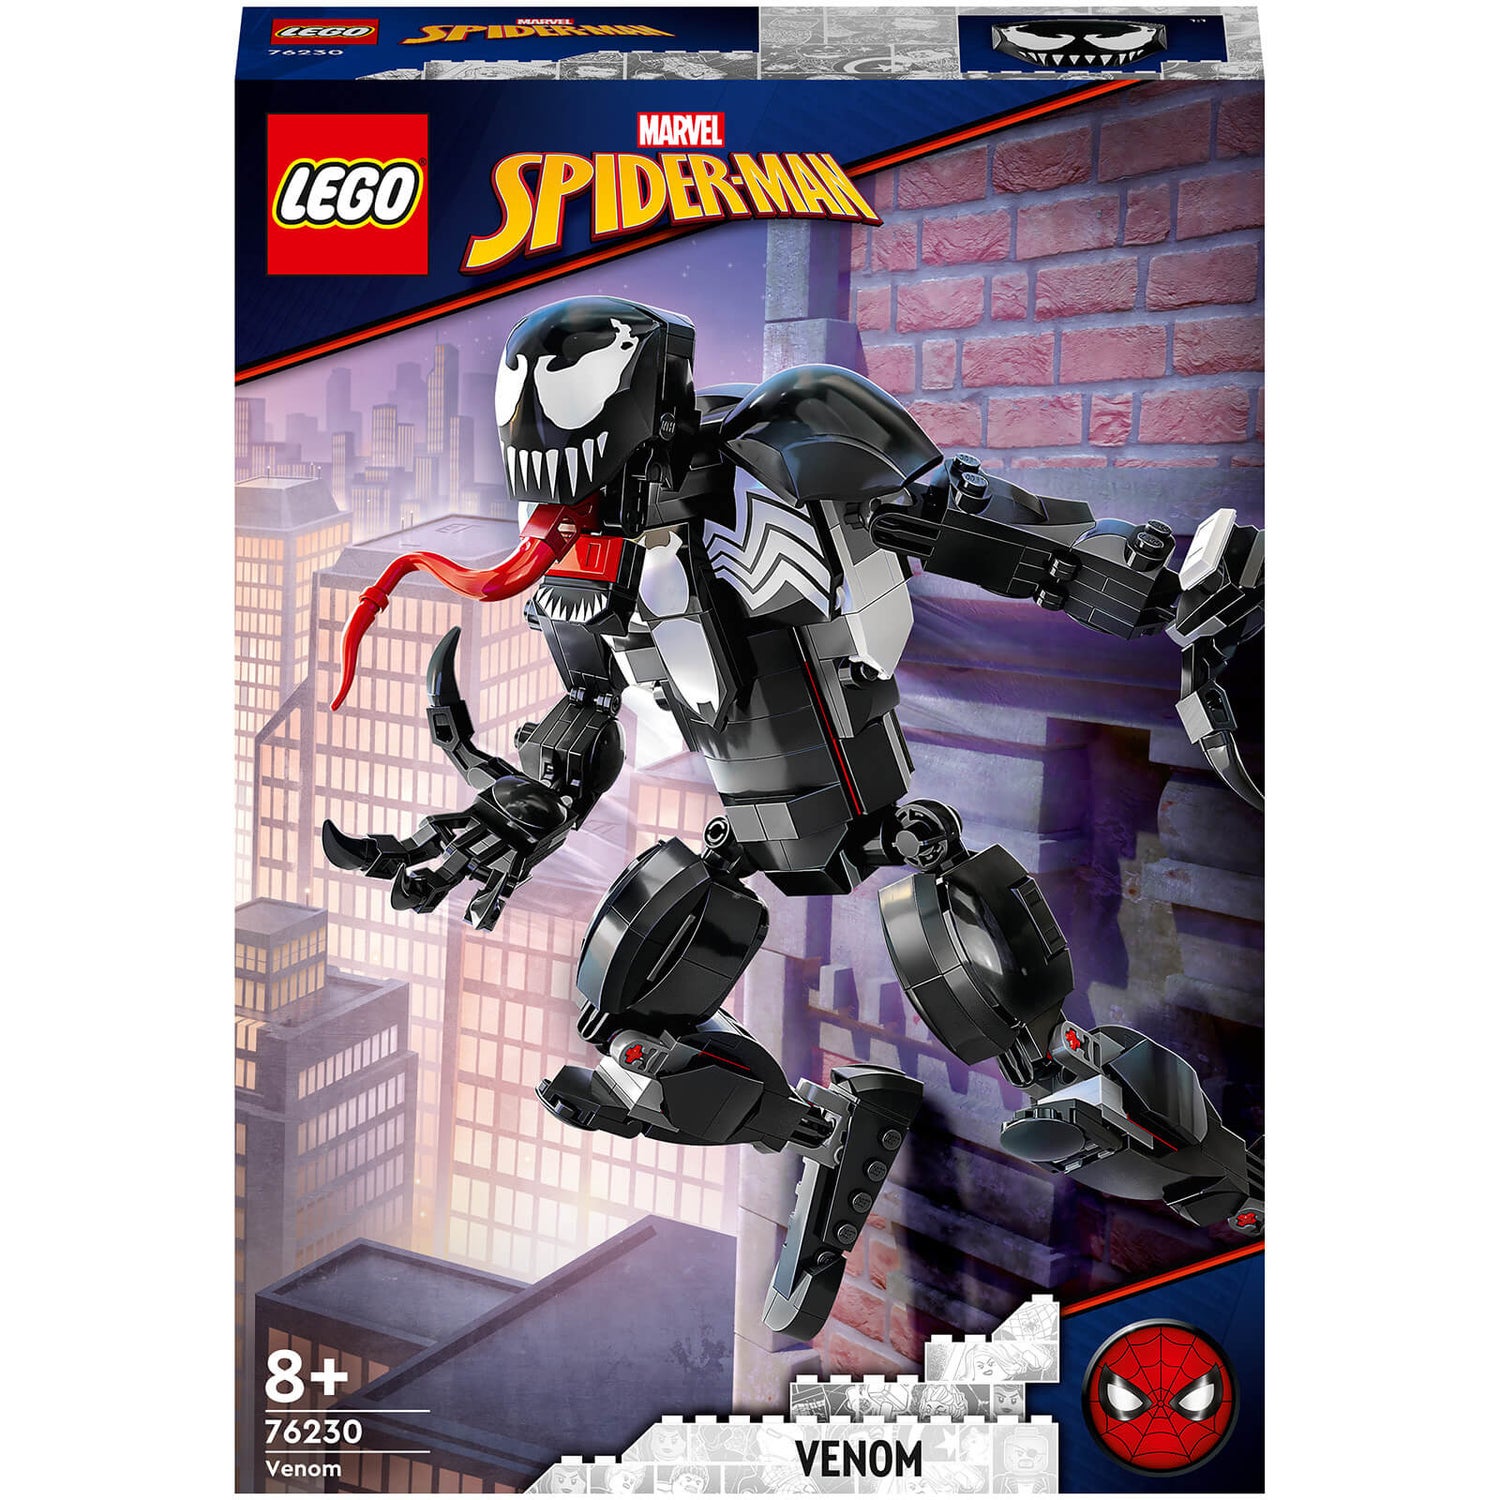 LEGO Marvel Venom Figure Spider-man Alien Building Toy (76230)